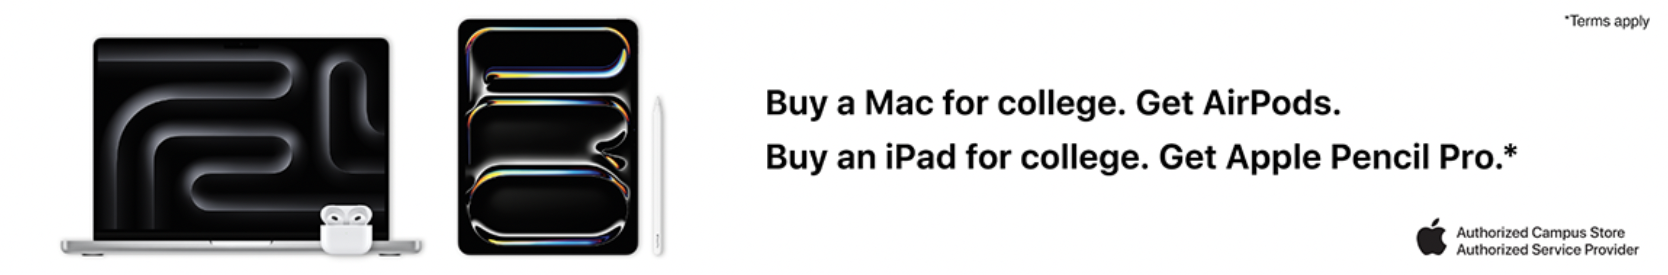 Apple Promotion: Buy Mac, Get AirPods.  Buy iPad, Get Apple Pencil.  Terms Apply